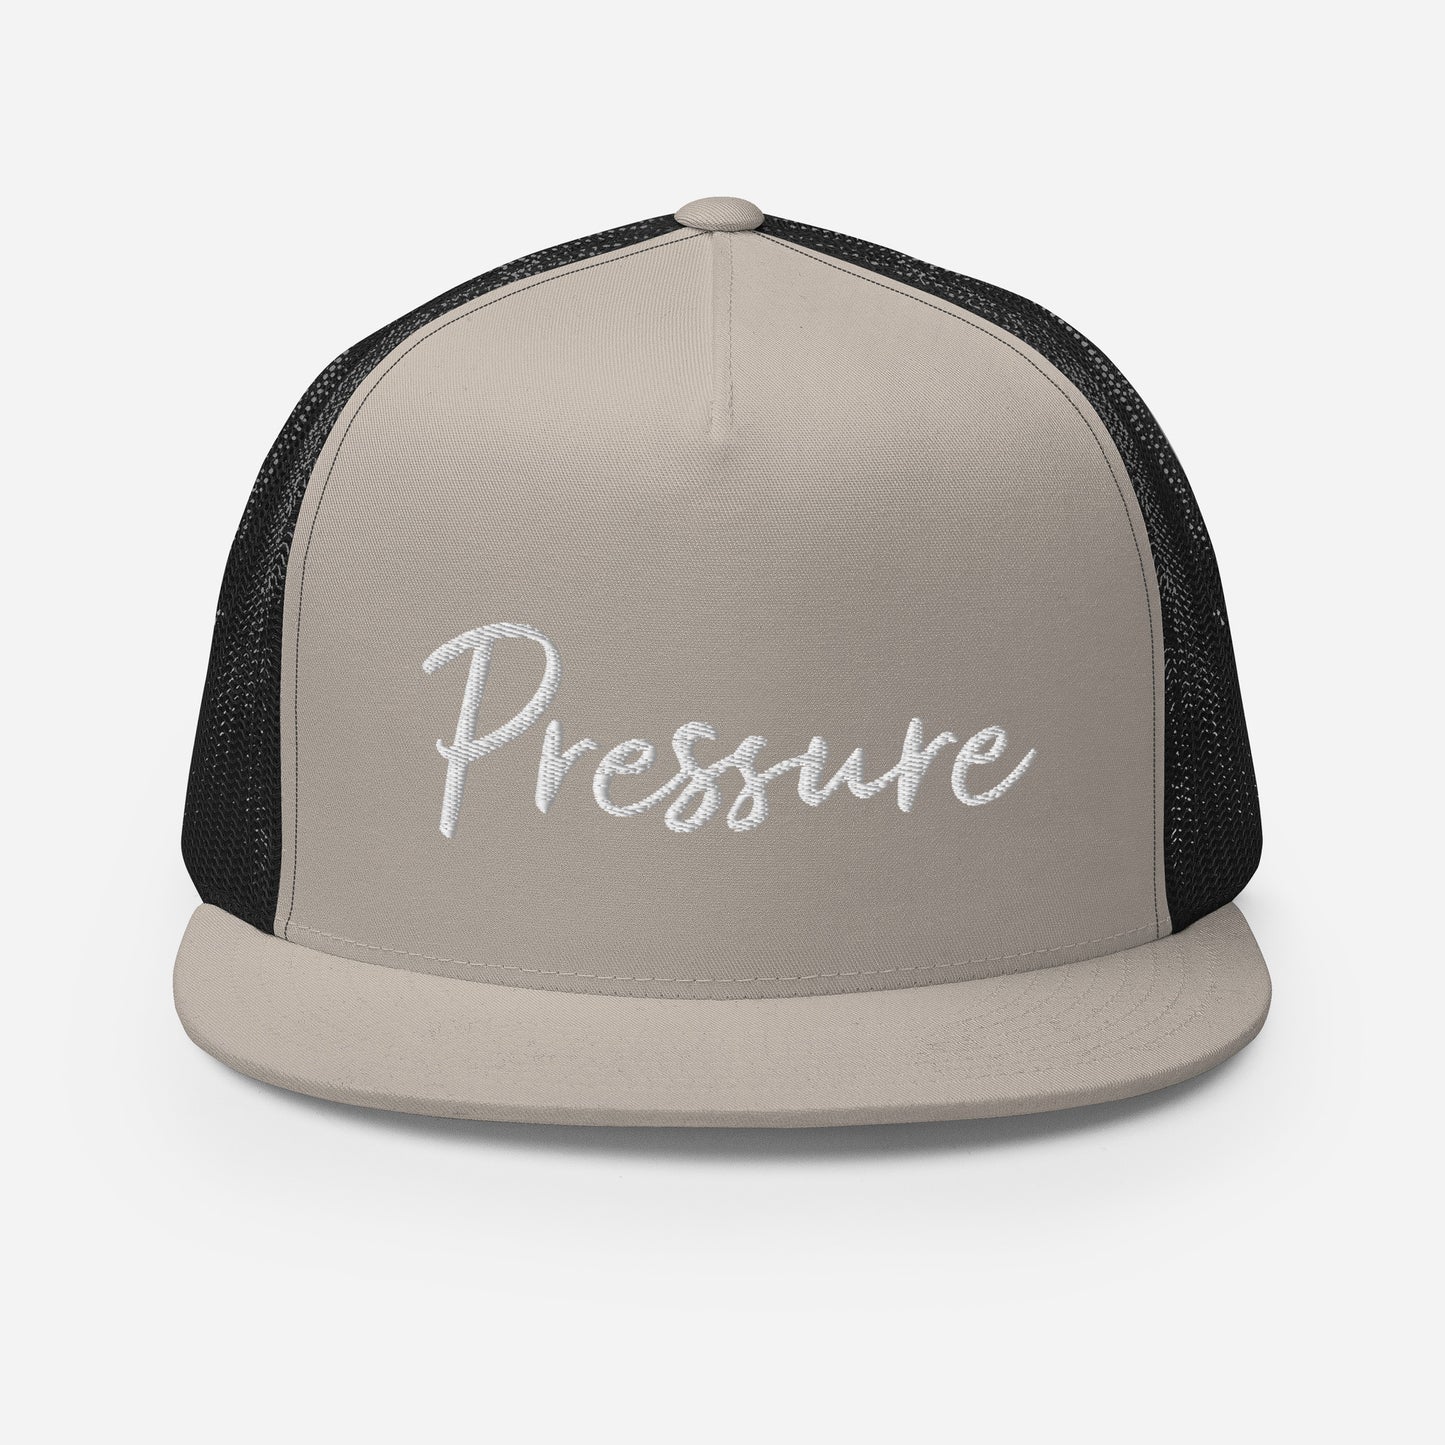 Pressure Trucker Cap